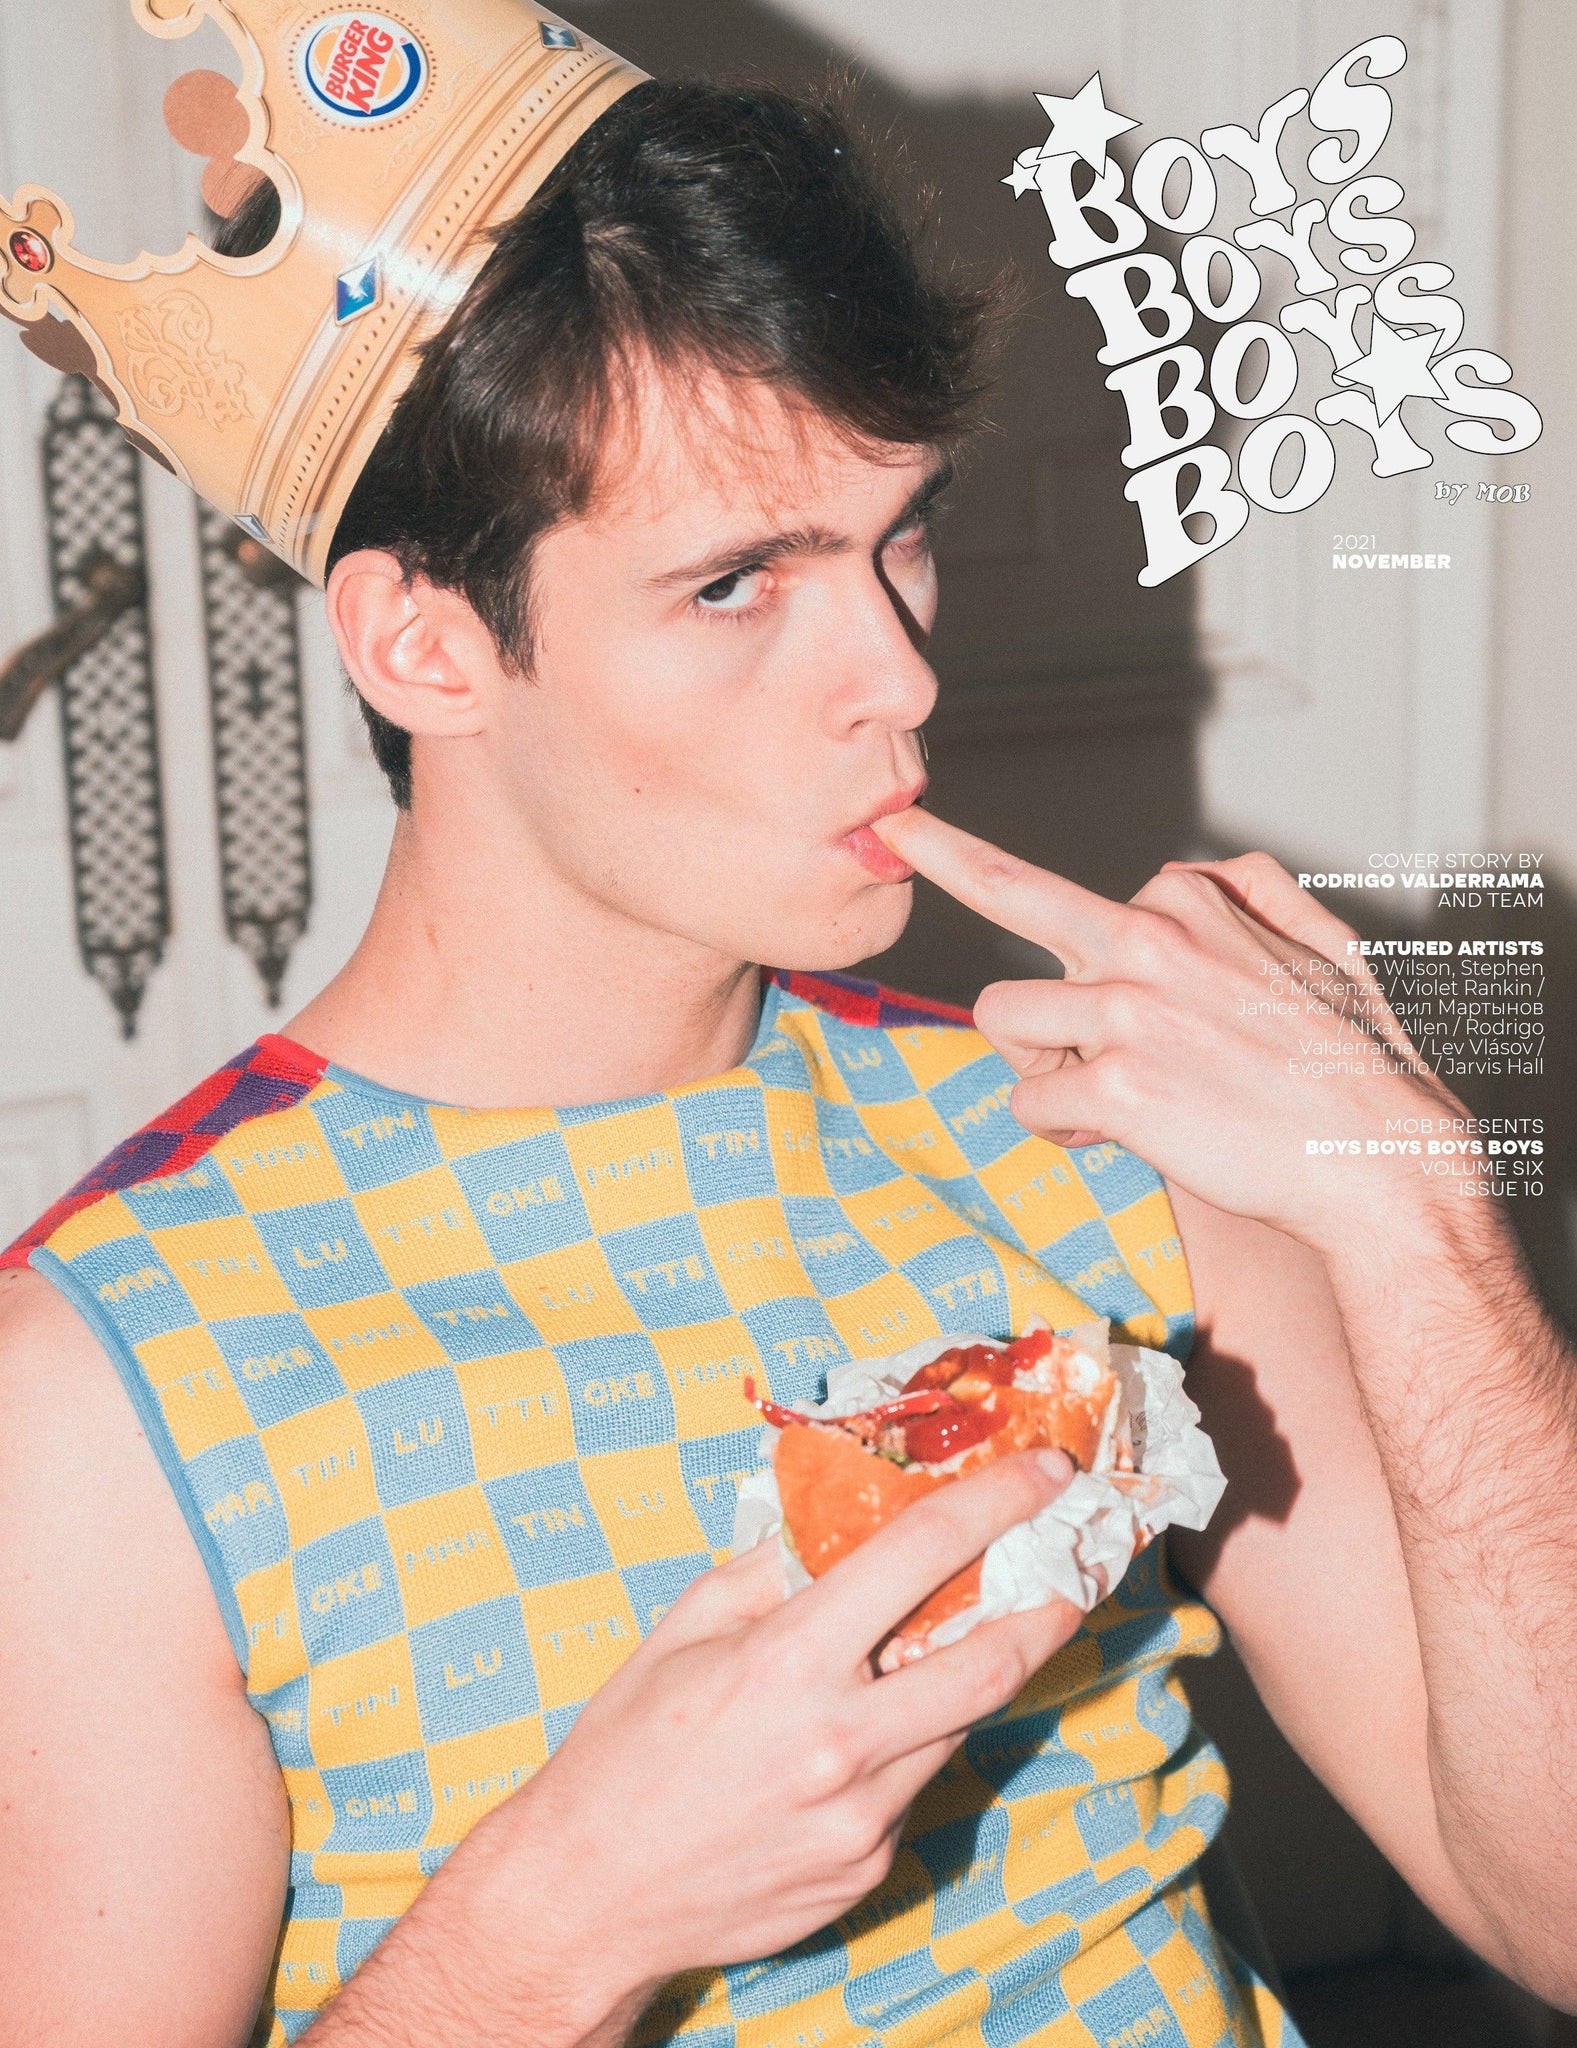 BOYS BOYS BOYS BOYS | VOLUME SIX | ISSUE #10 - Mob Journal